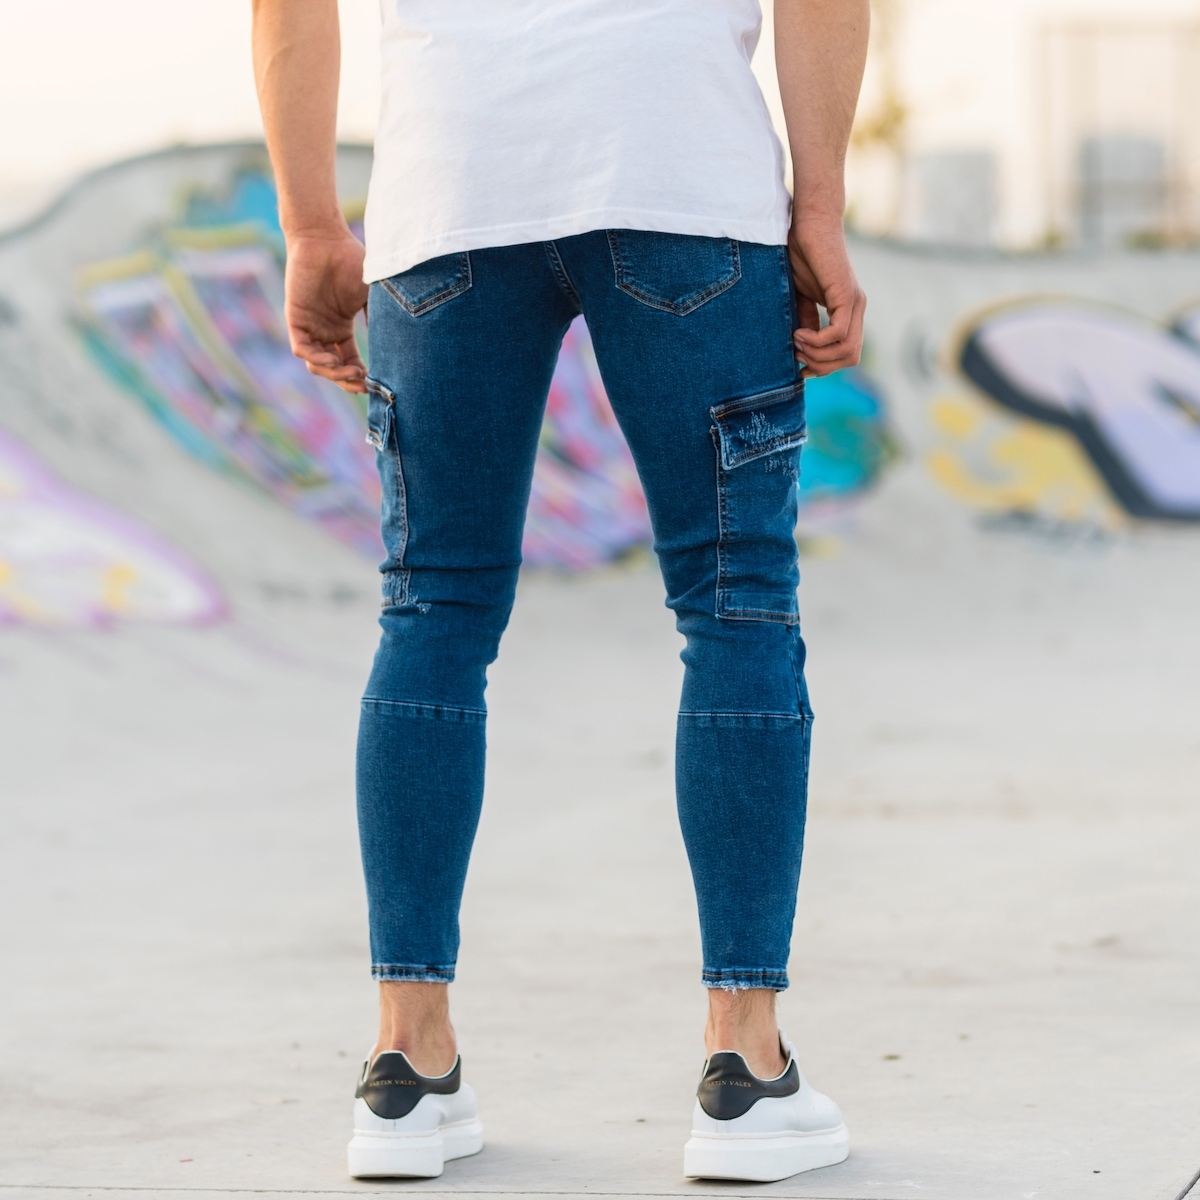 Men's Cargo Jeans With Zipper Details In Blue